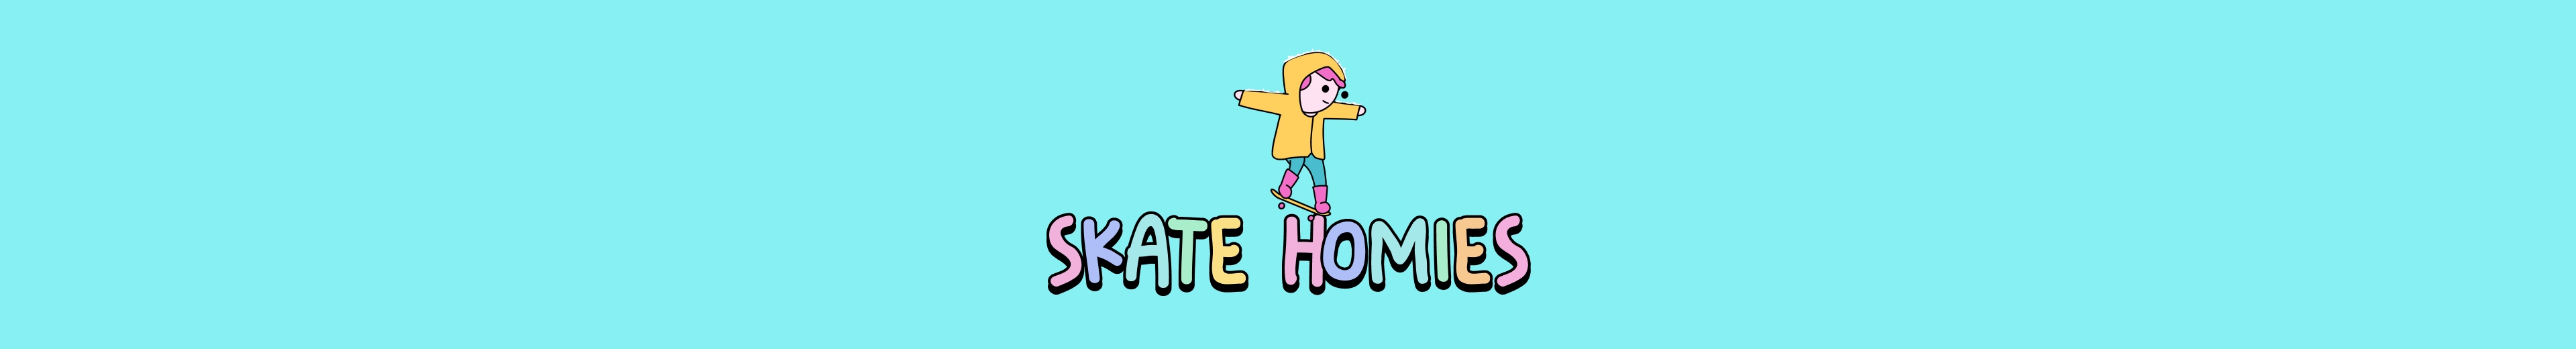 Skate Homies banner